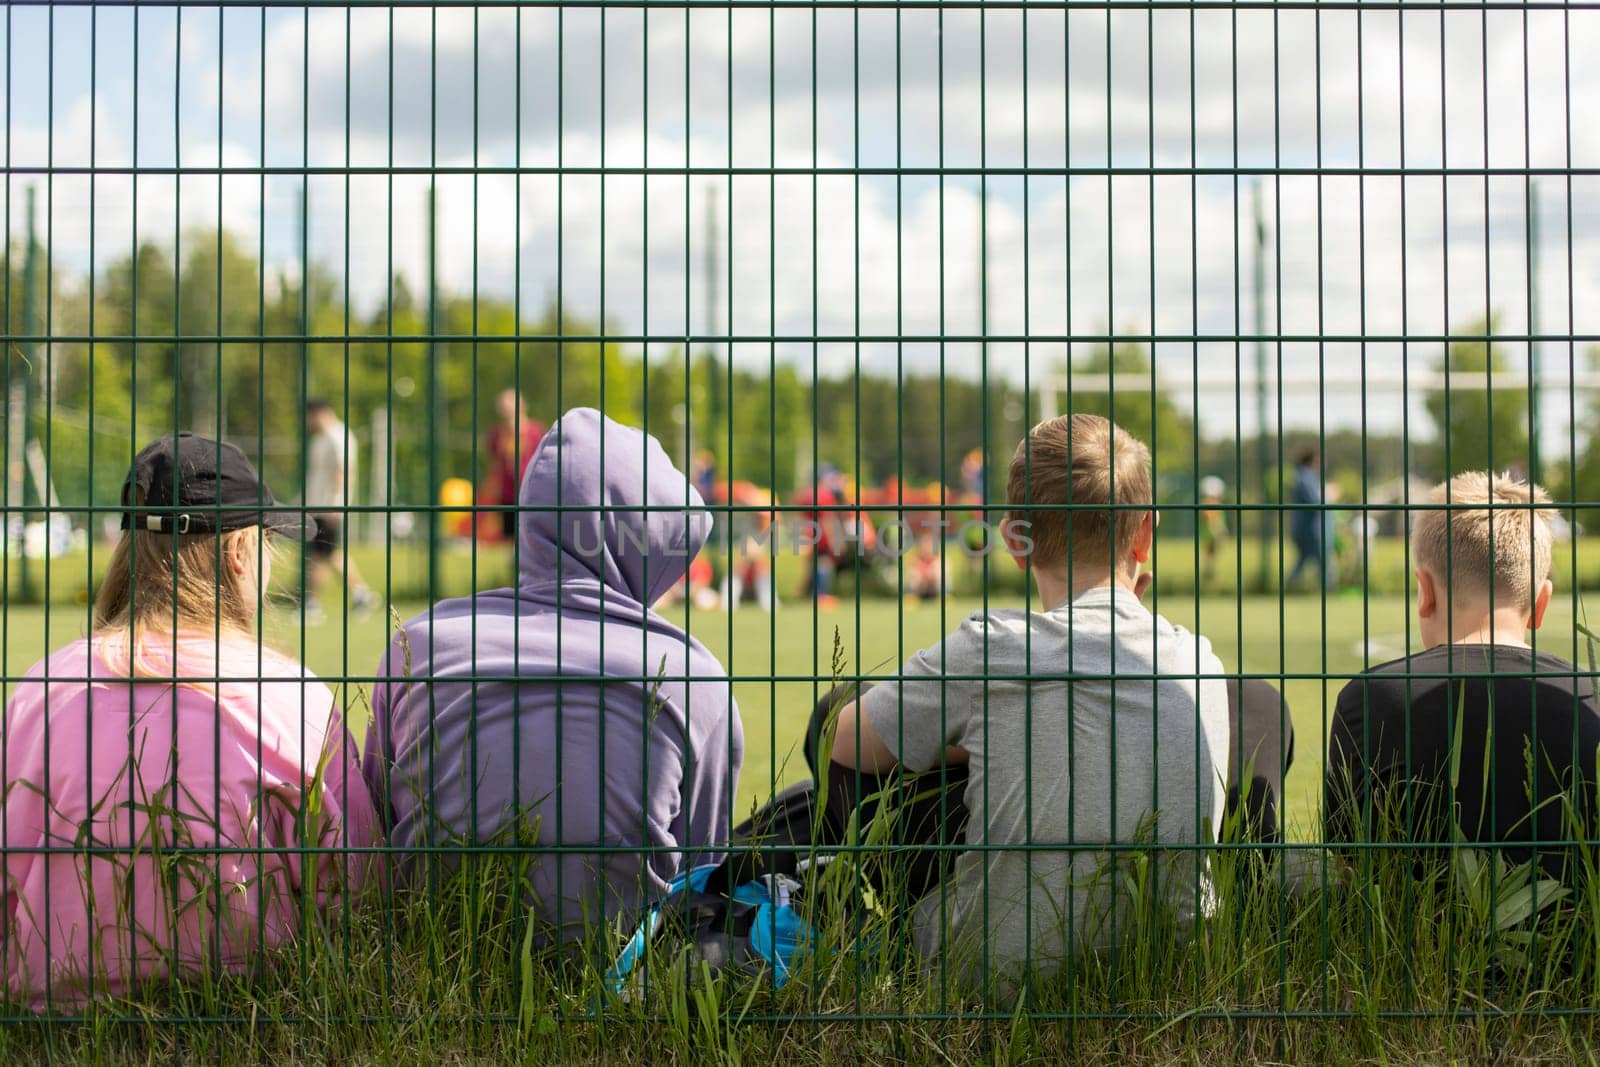 Children in stadium. Teenagers on sports field. Schoolchildren sit on grass behind net. Fence around football field. Spectators at sports competition.